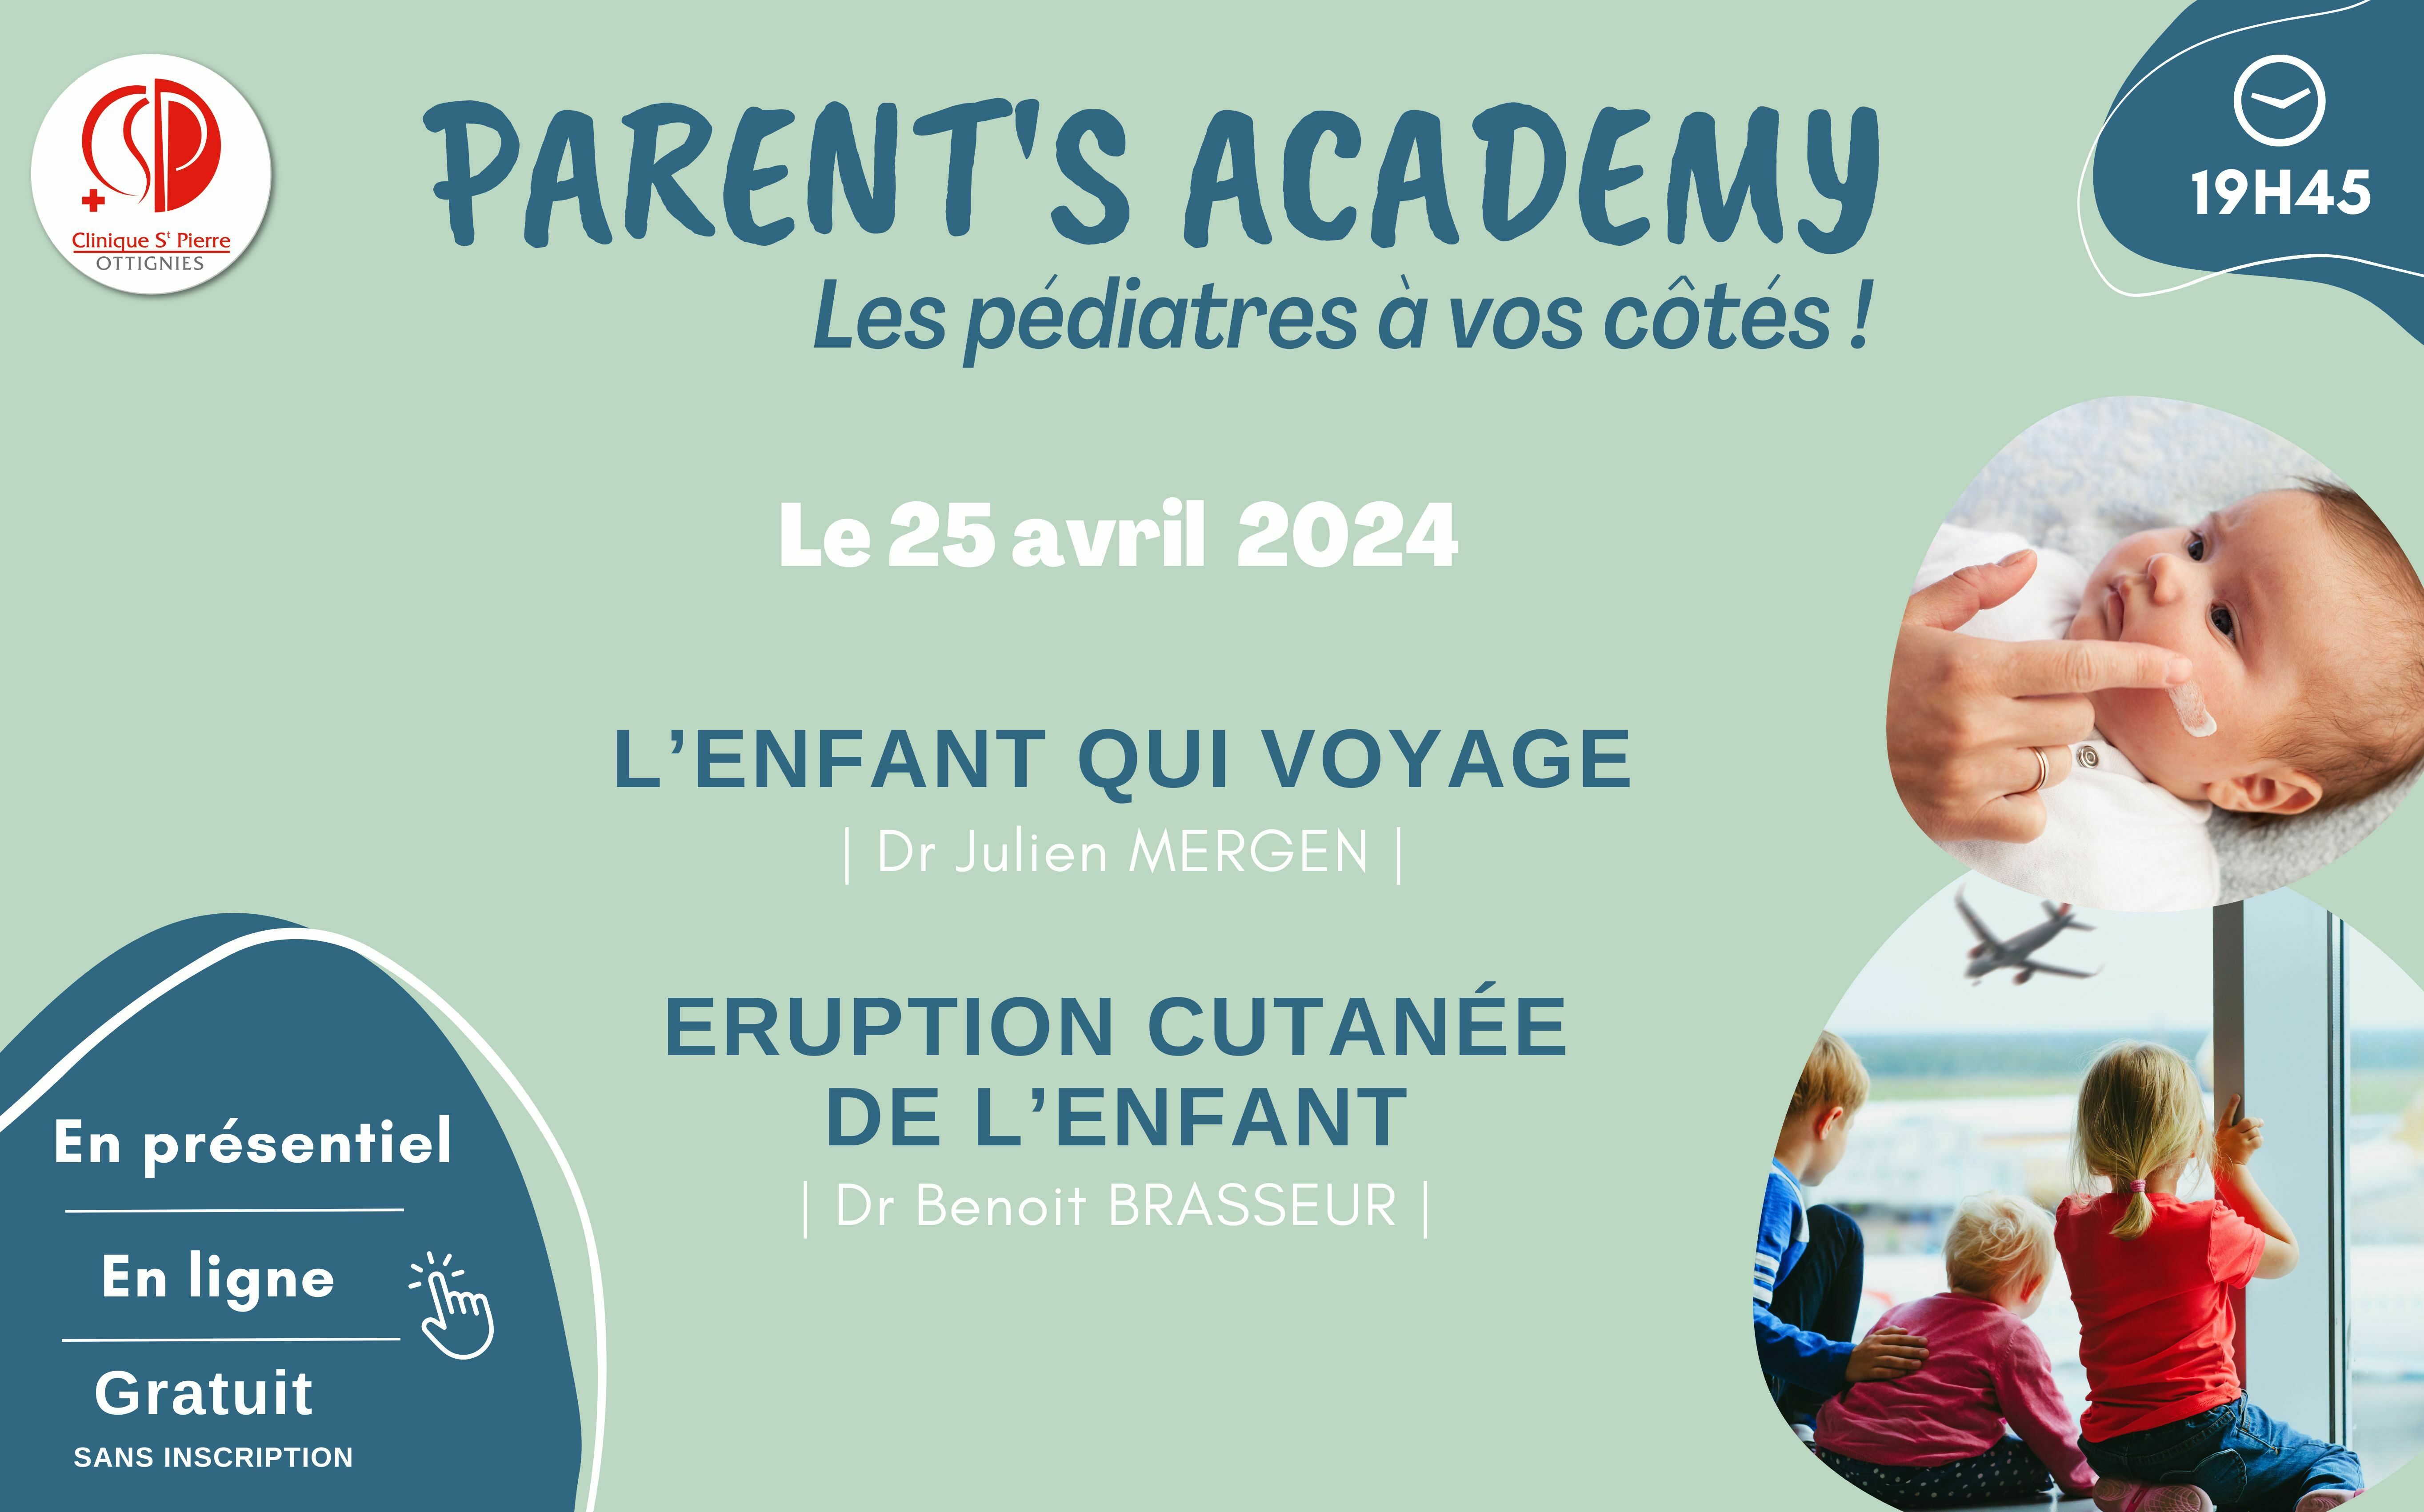 Parents academy avril 2024 image craft